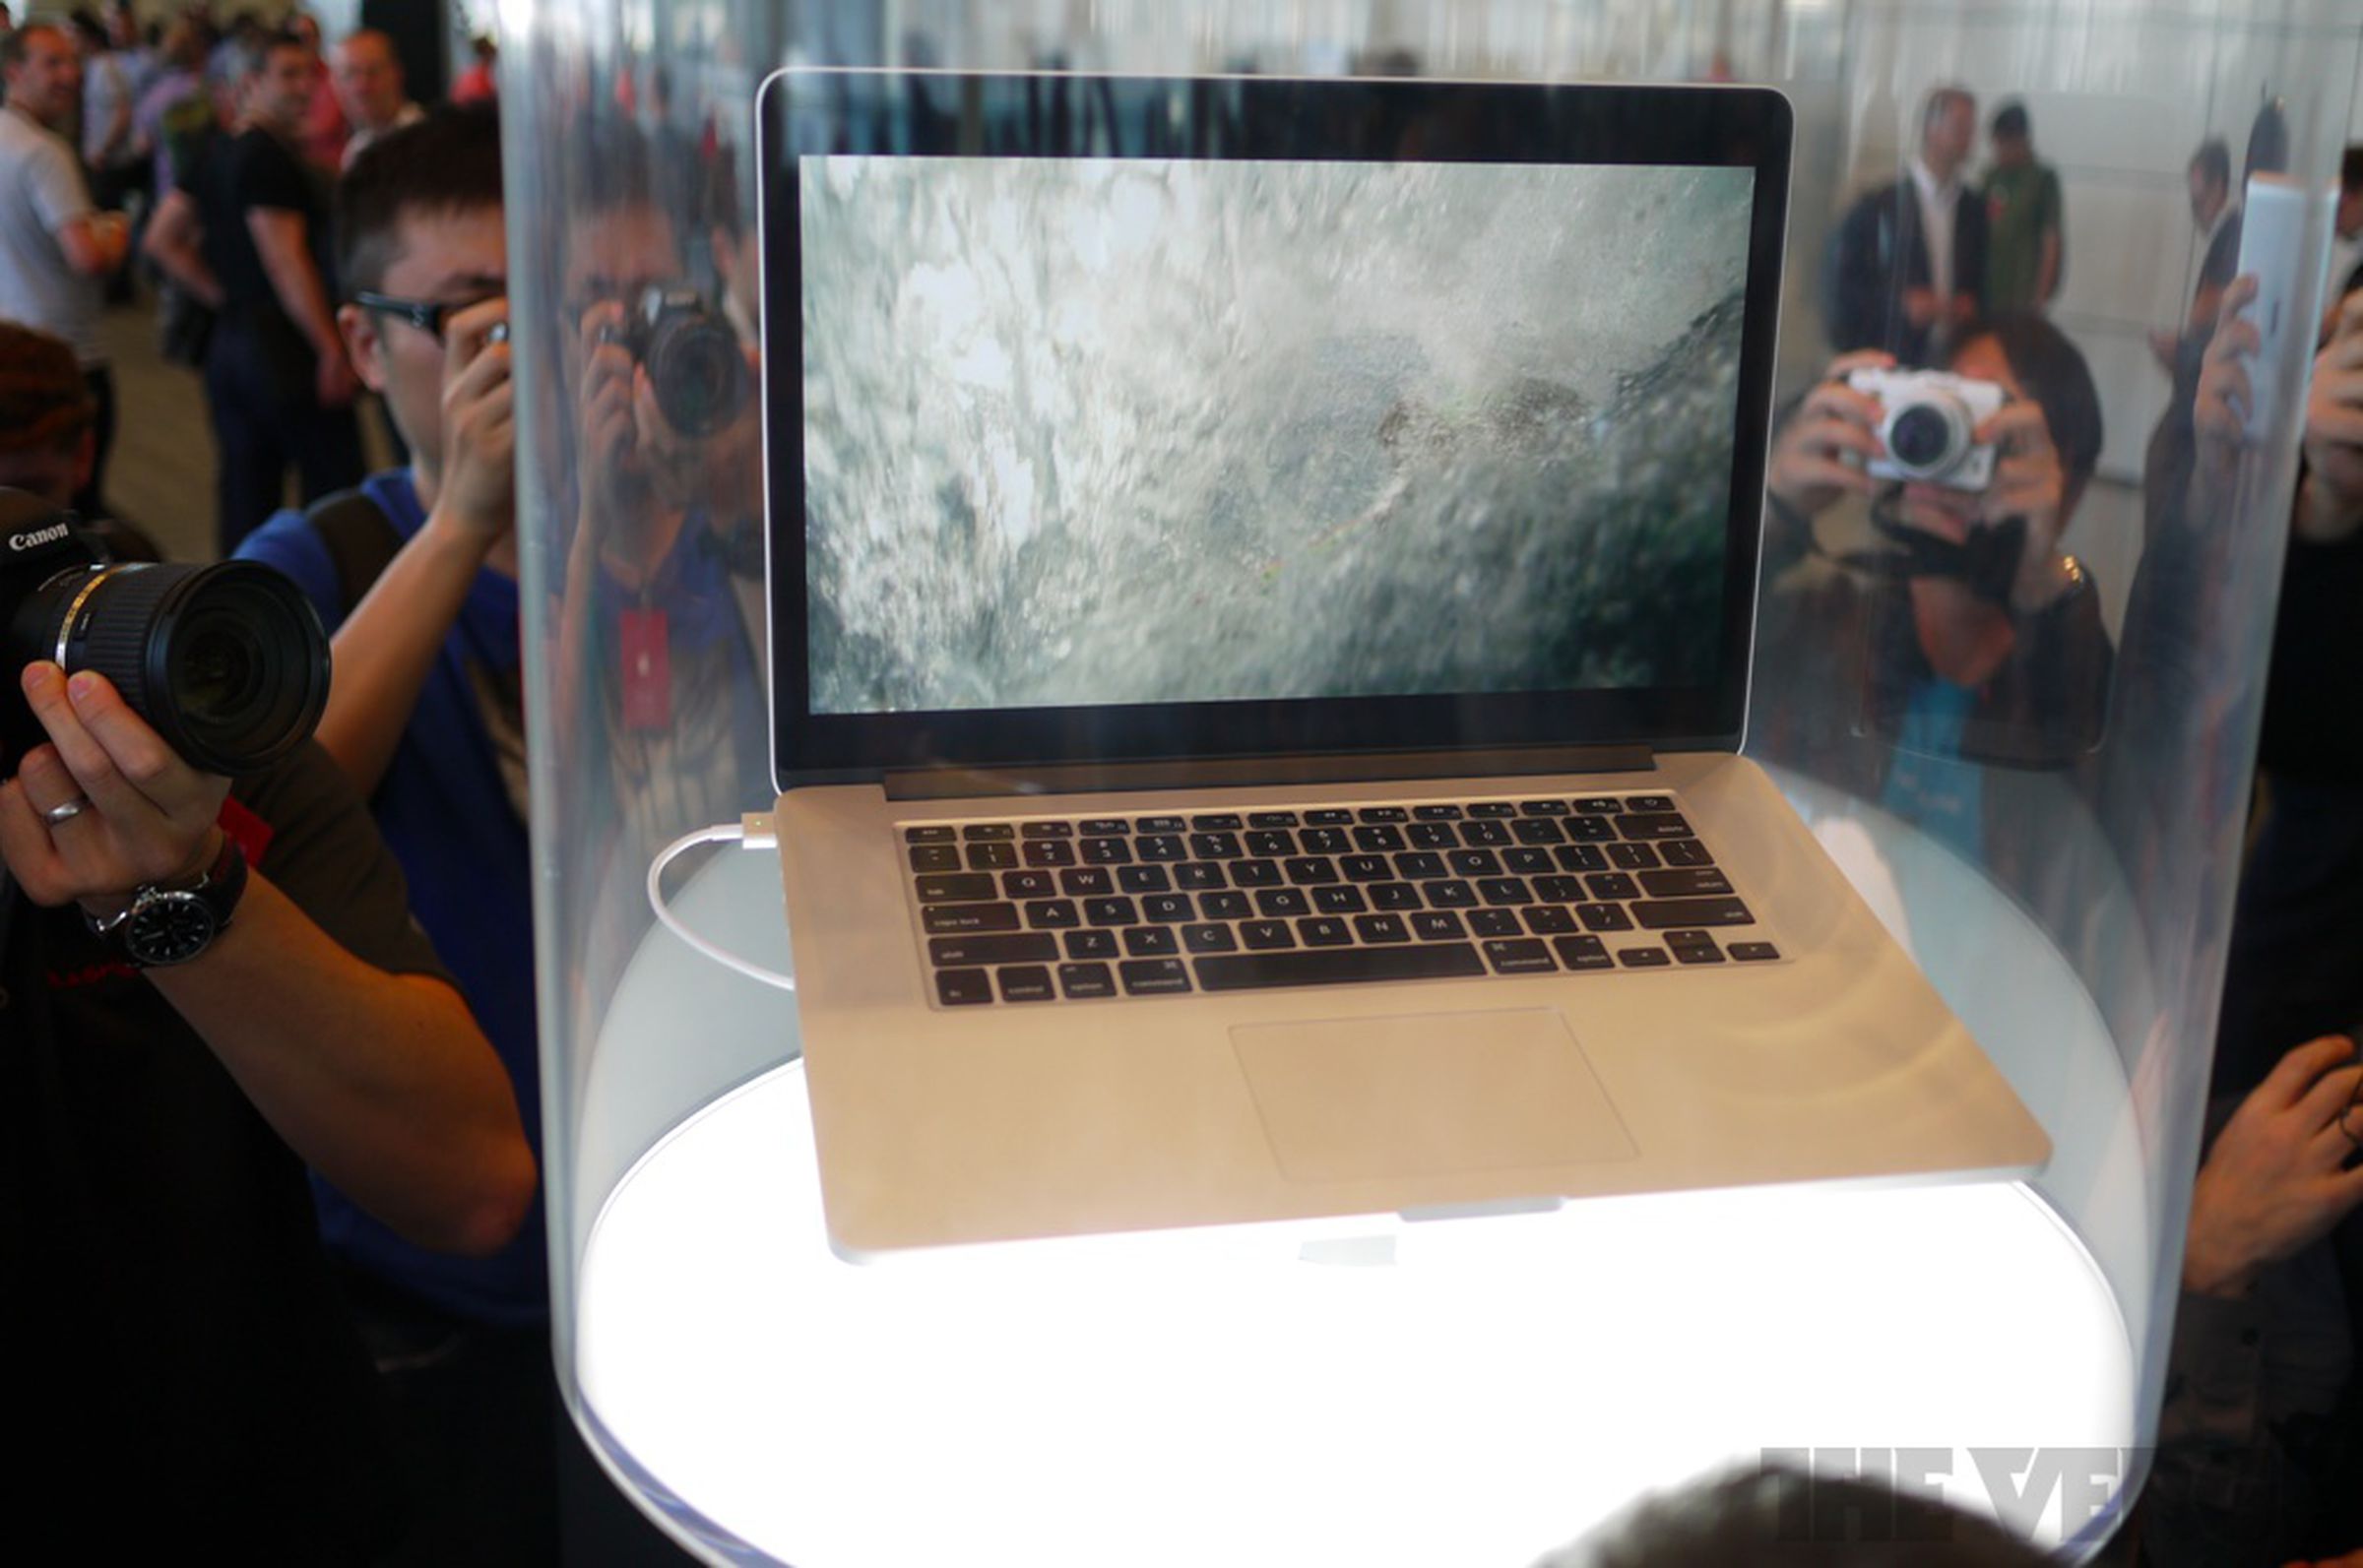 Next generation MacBook Pro with Retina display first look!